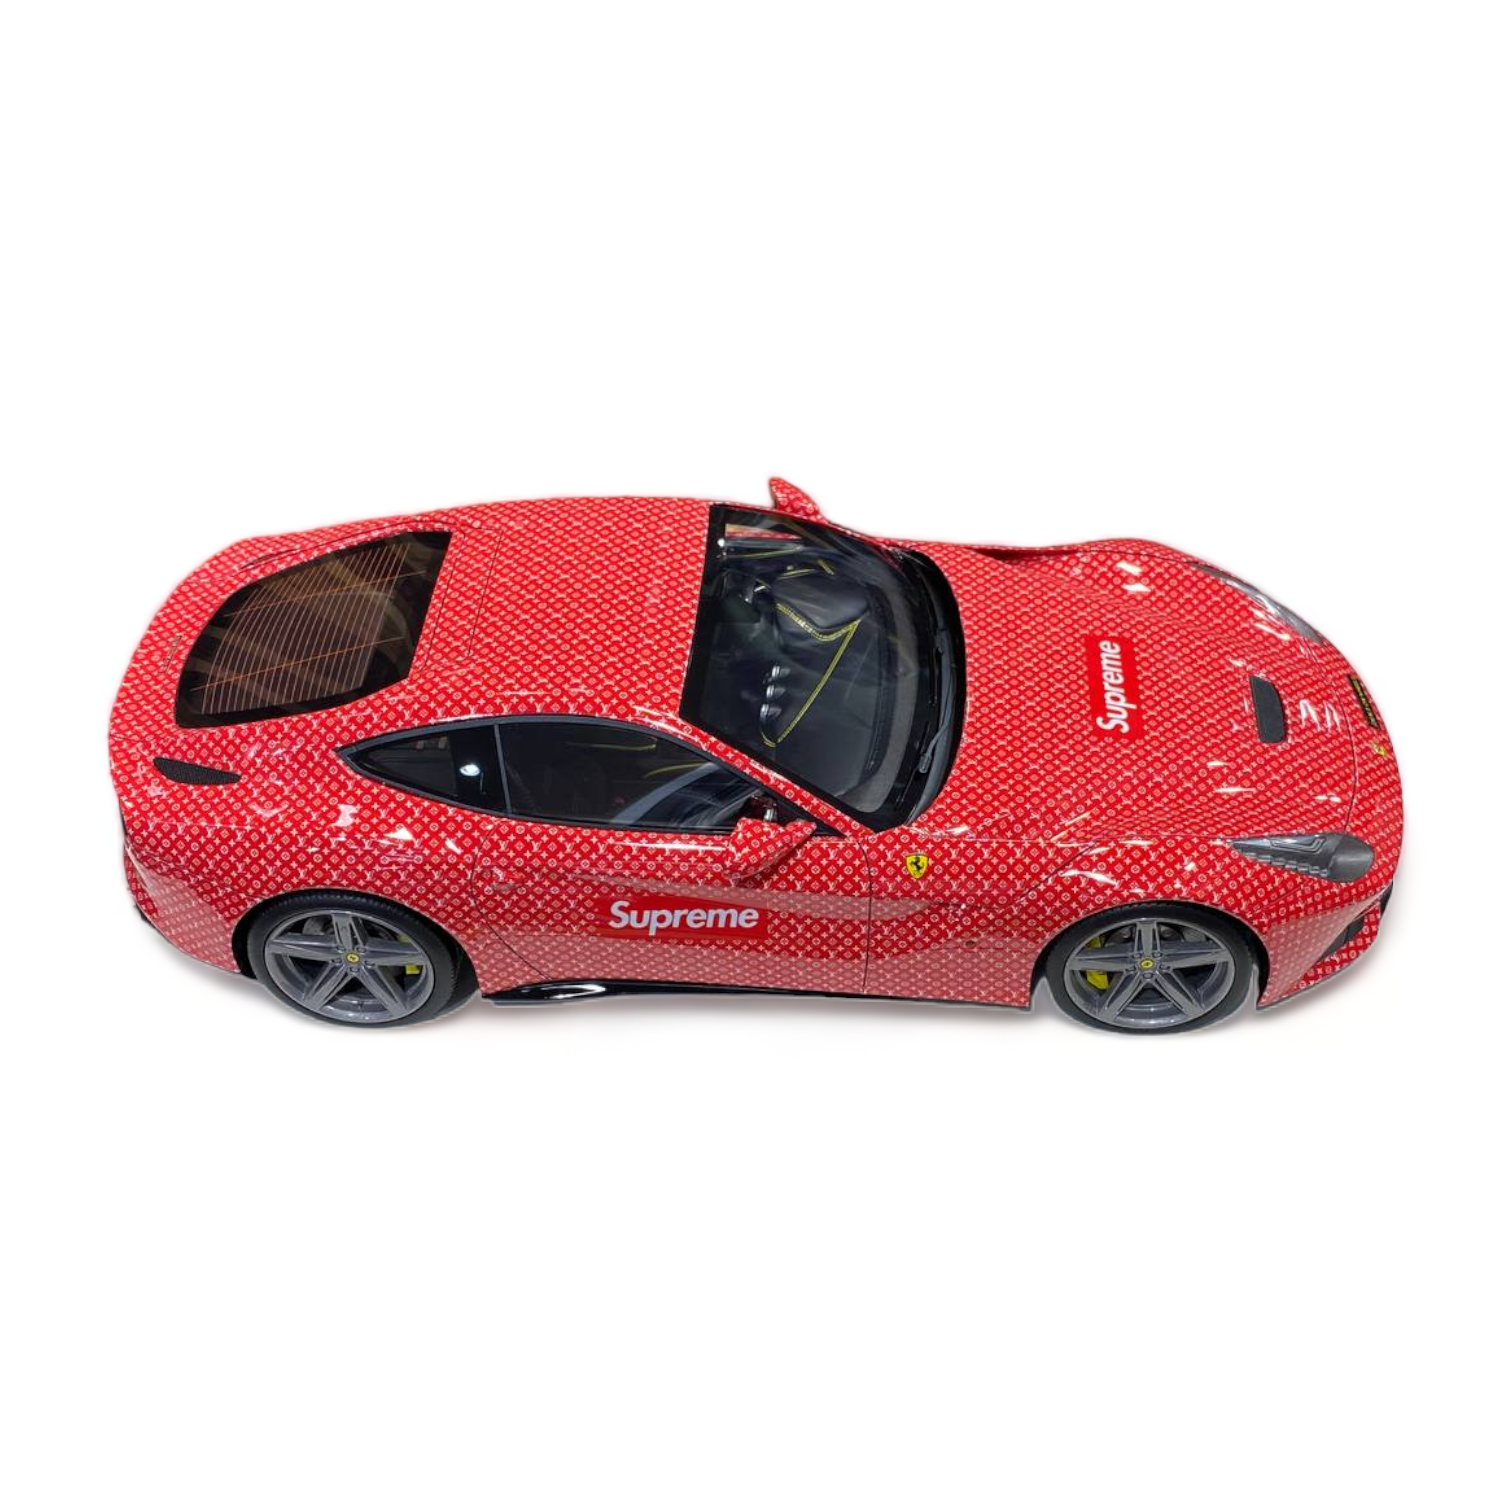 Ferrari F12 Berlinetta LV Supreme Red 1/18 By VV Models|Sold in Dturman.com Dubai UAE.